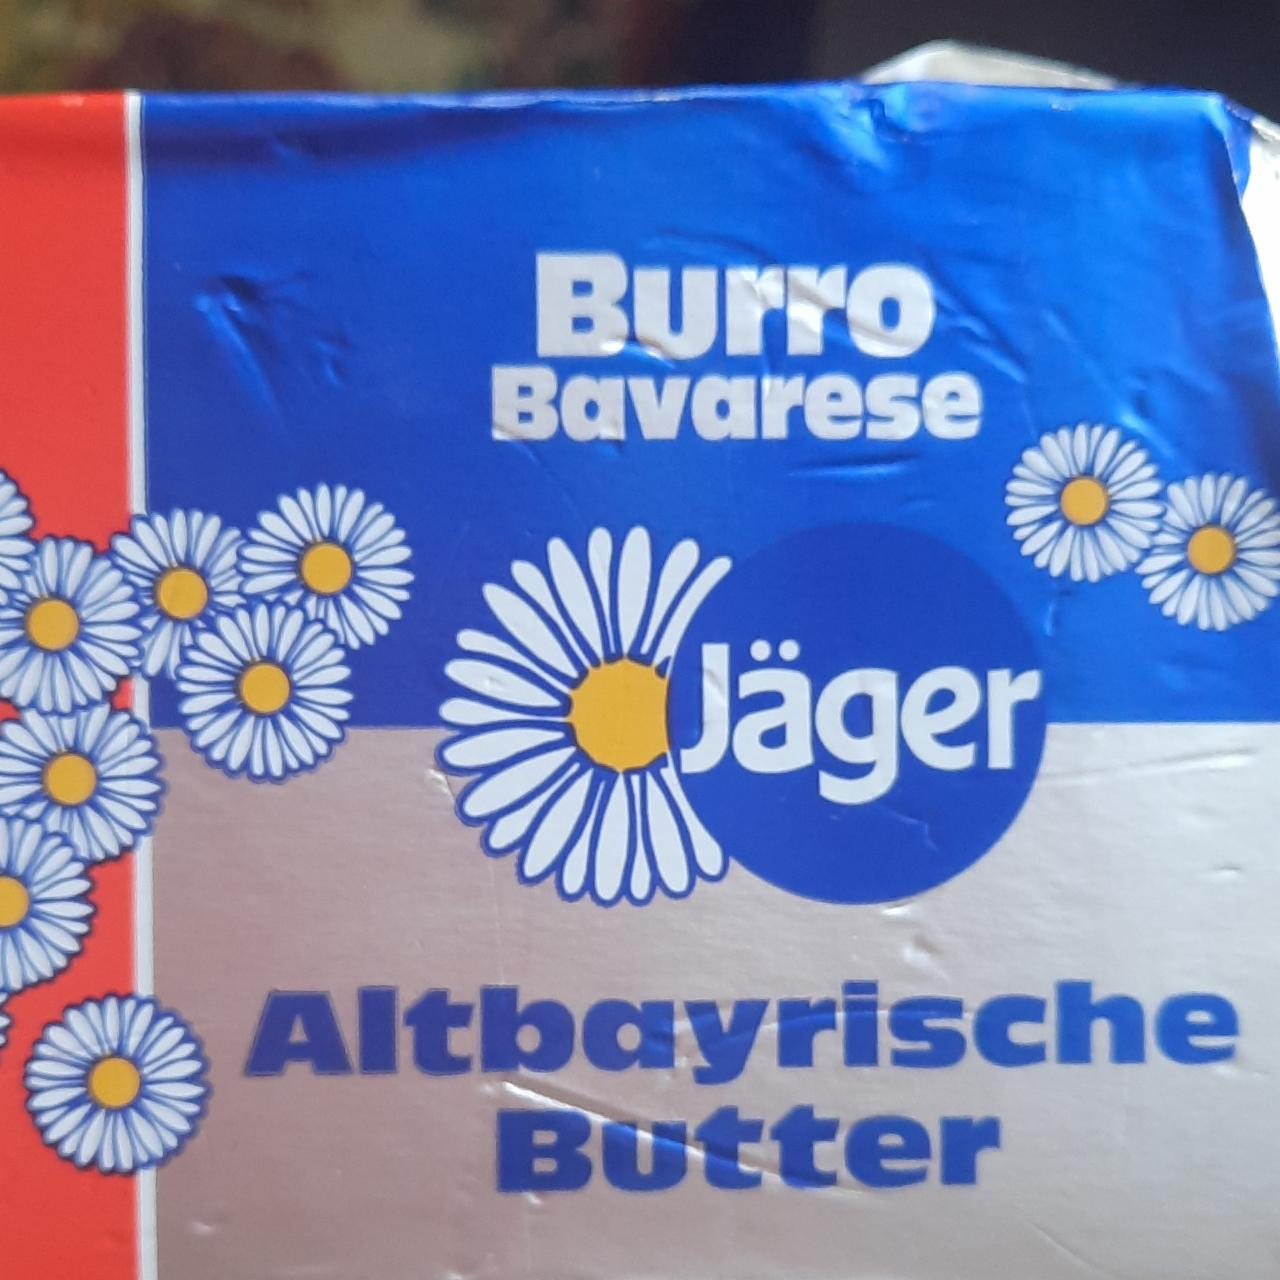 Фото - Масло солодковершкове Altbayrische Butter Burro Bavarese Jager